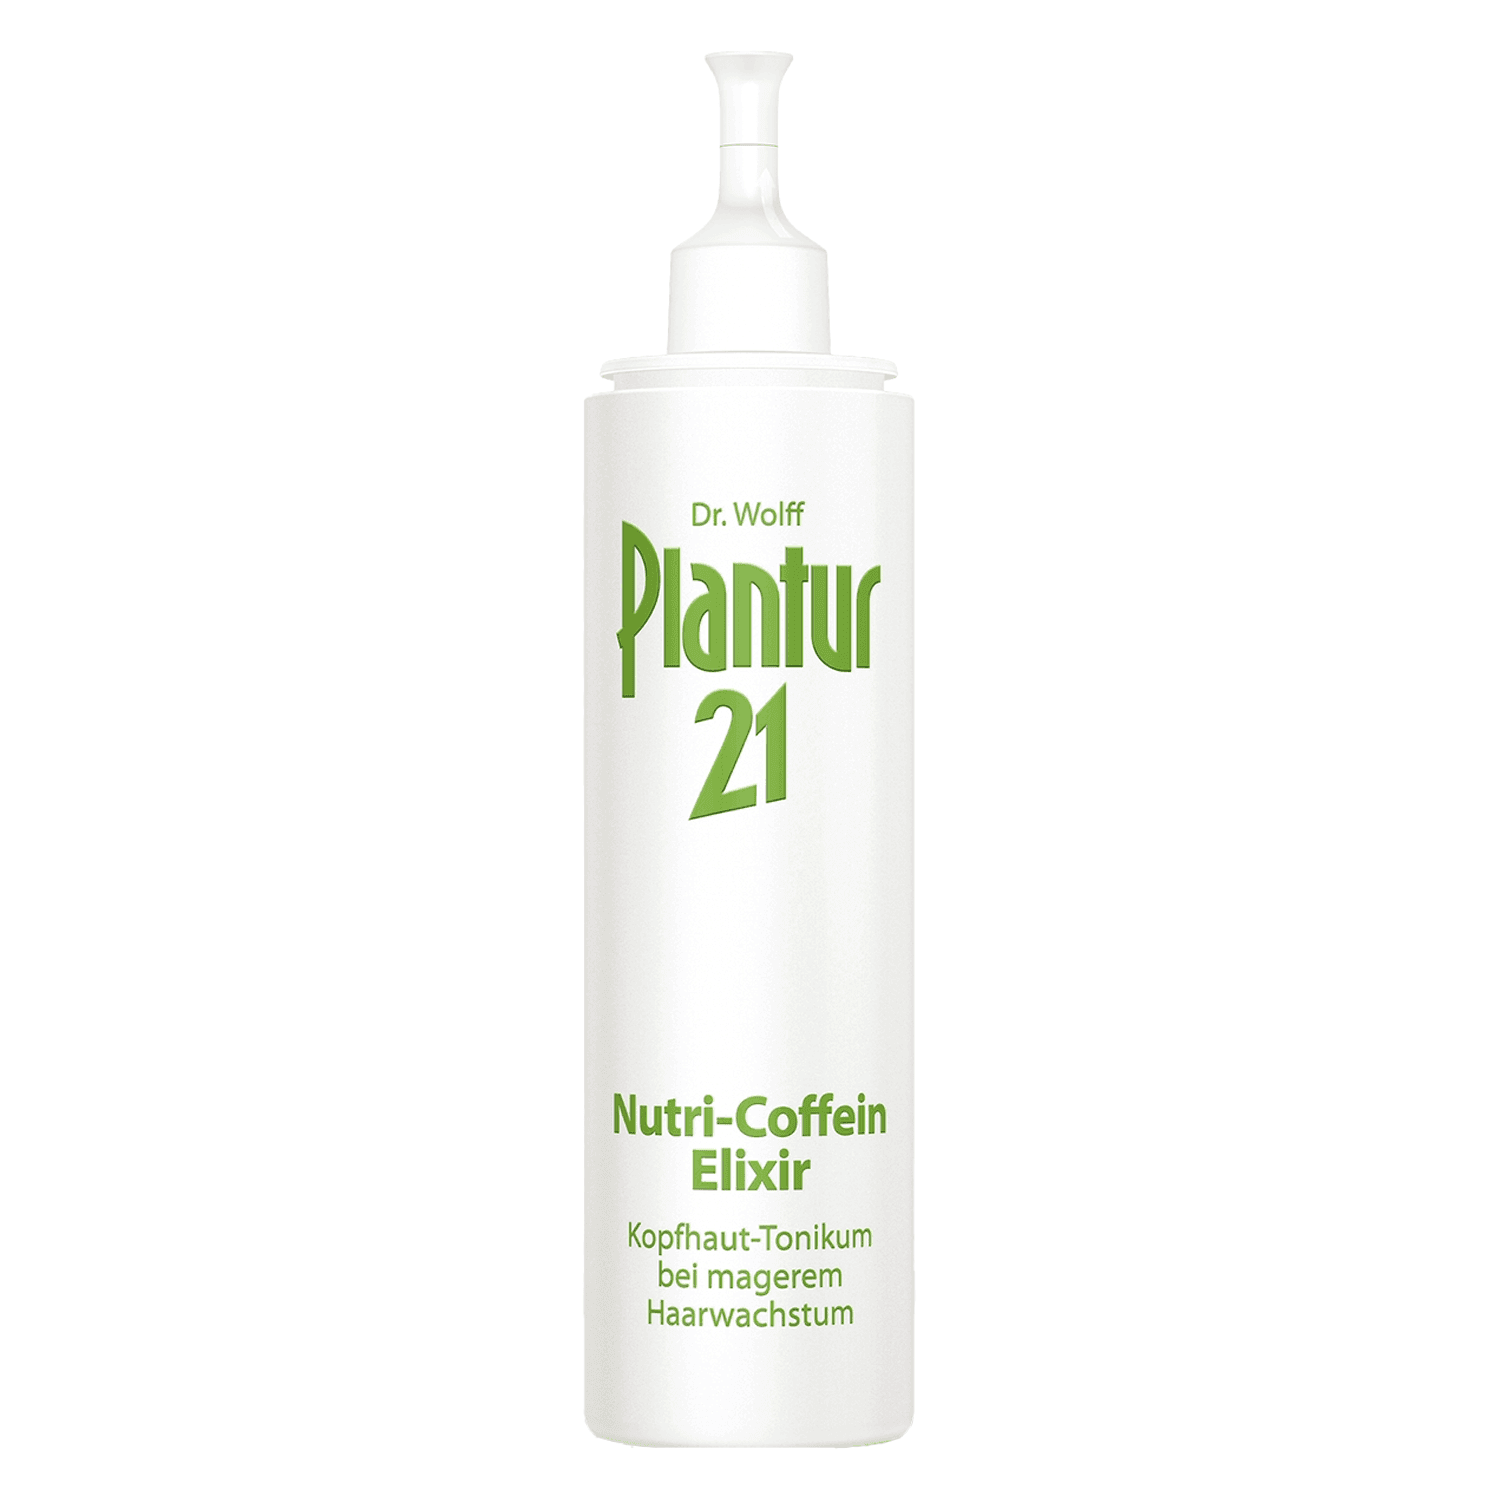 Plantur 21 - Nutri-Caffeine Elixir